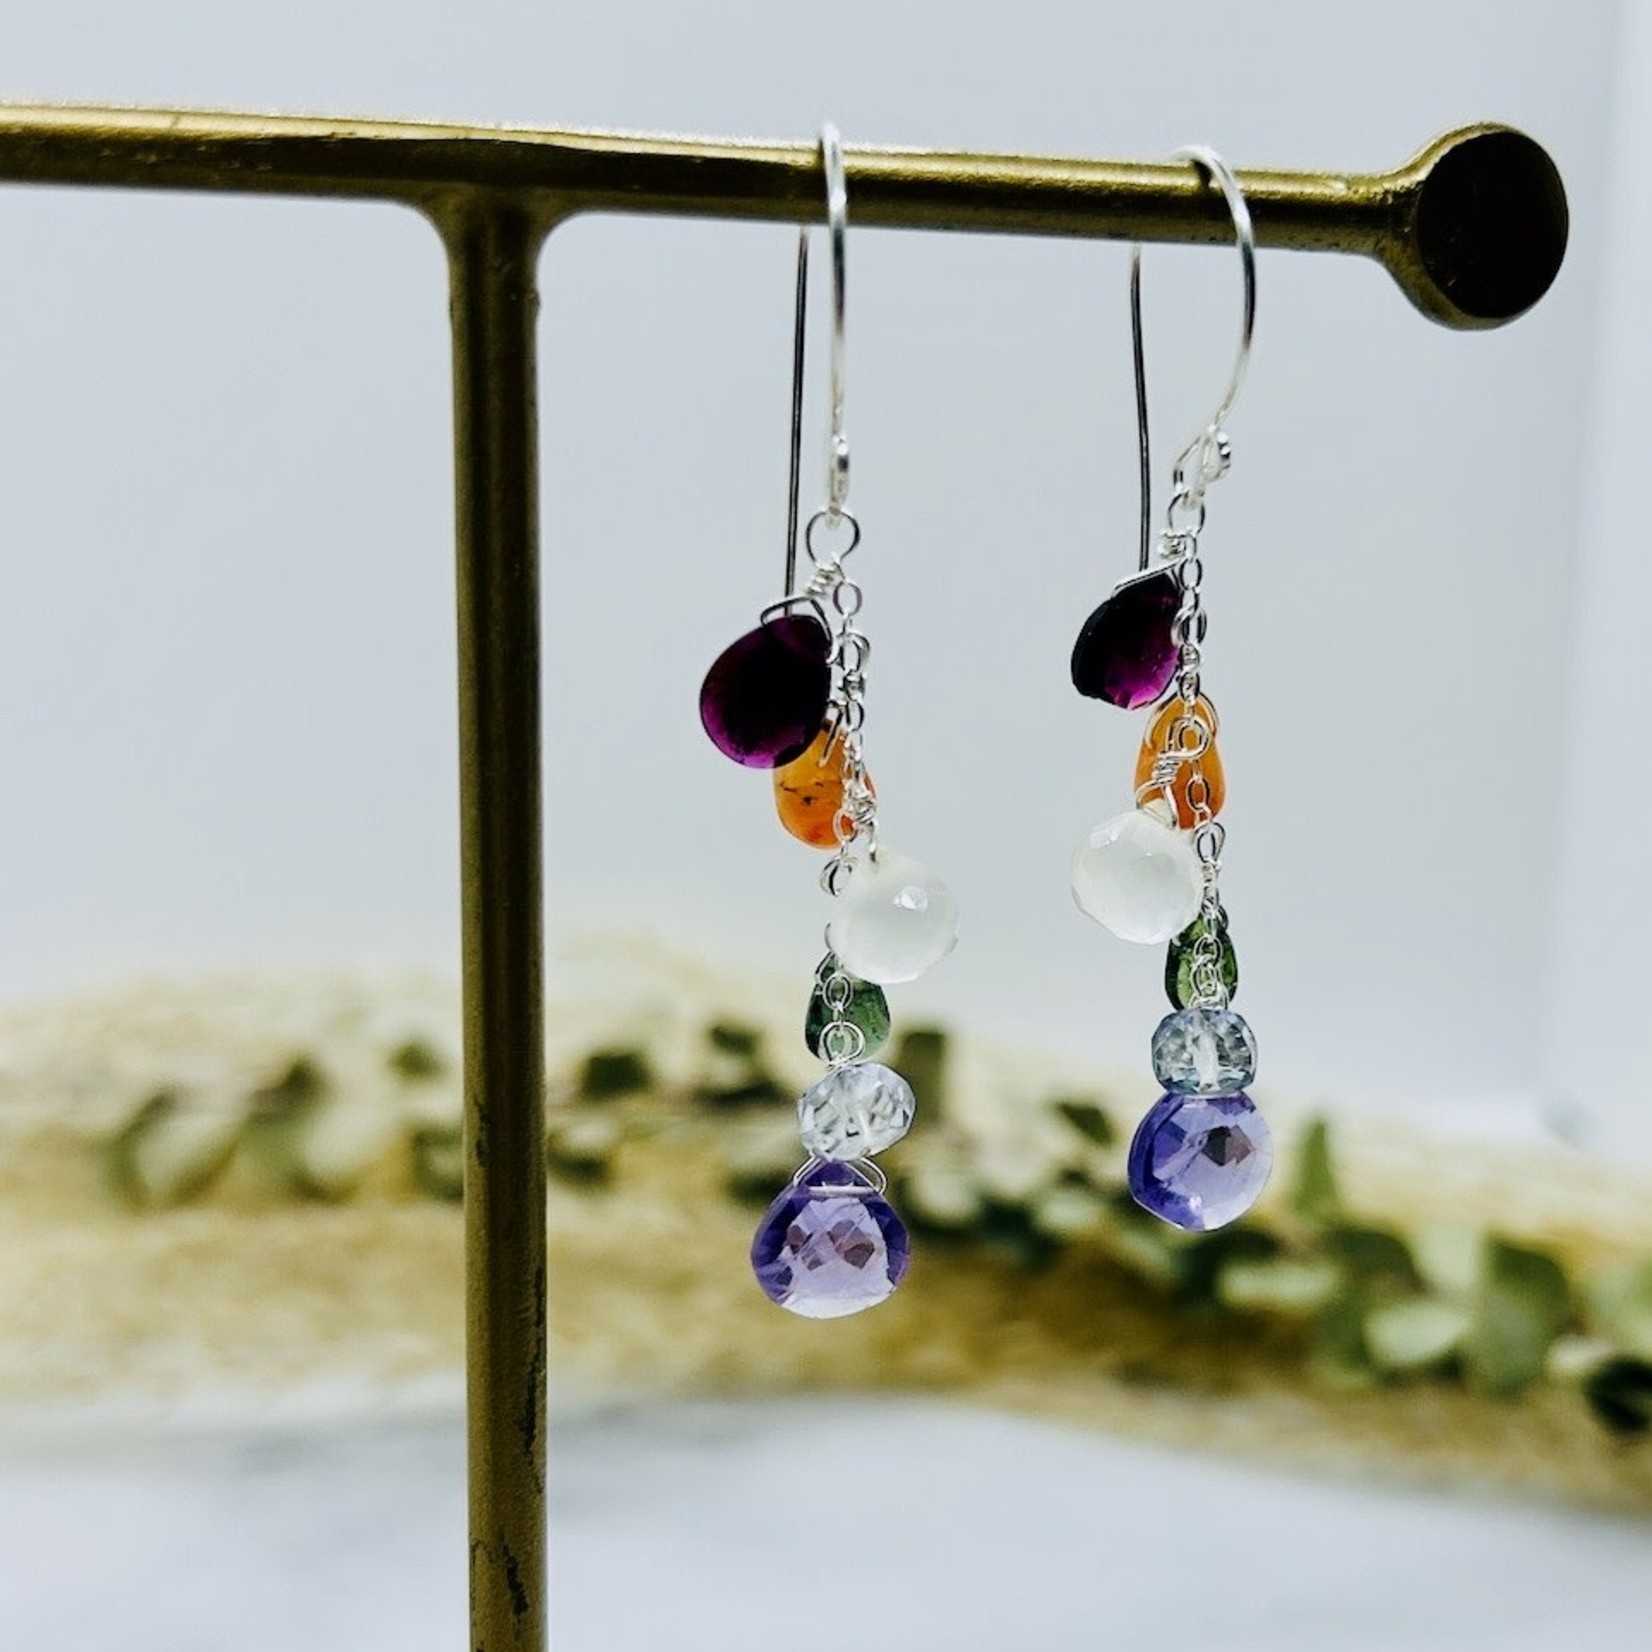 Handmade Sterling Silver Earrings with Rainbow Cascade